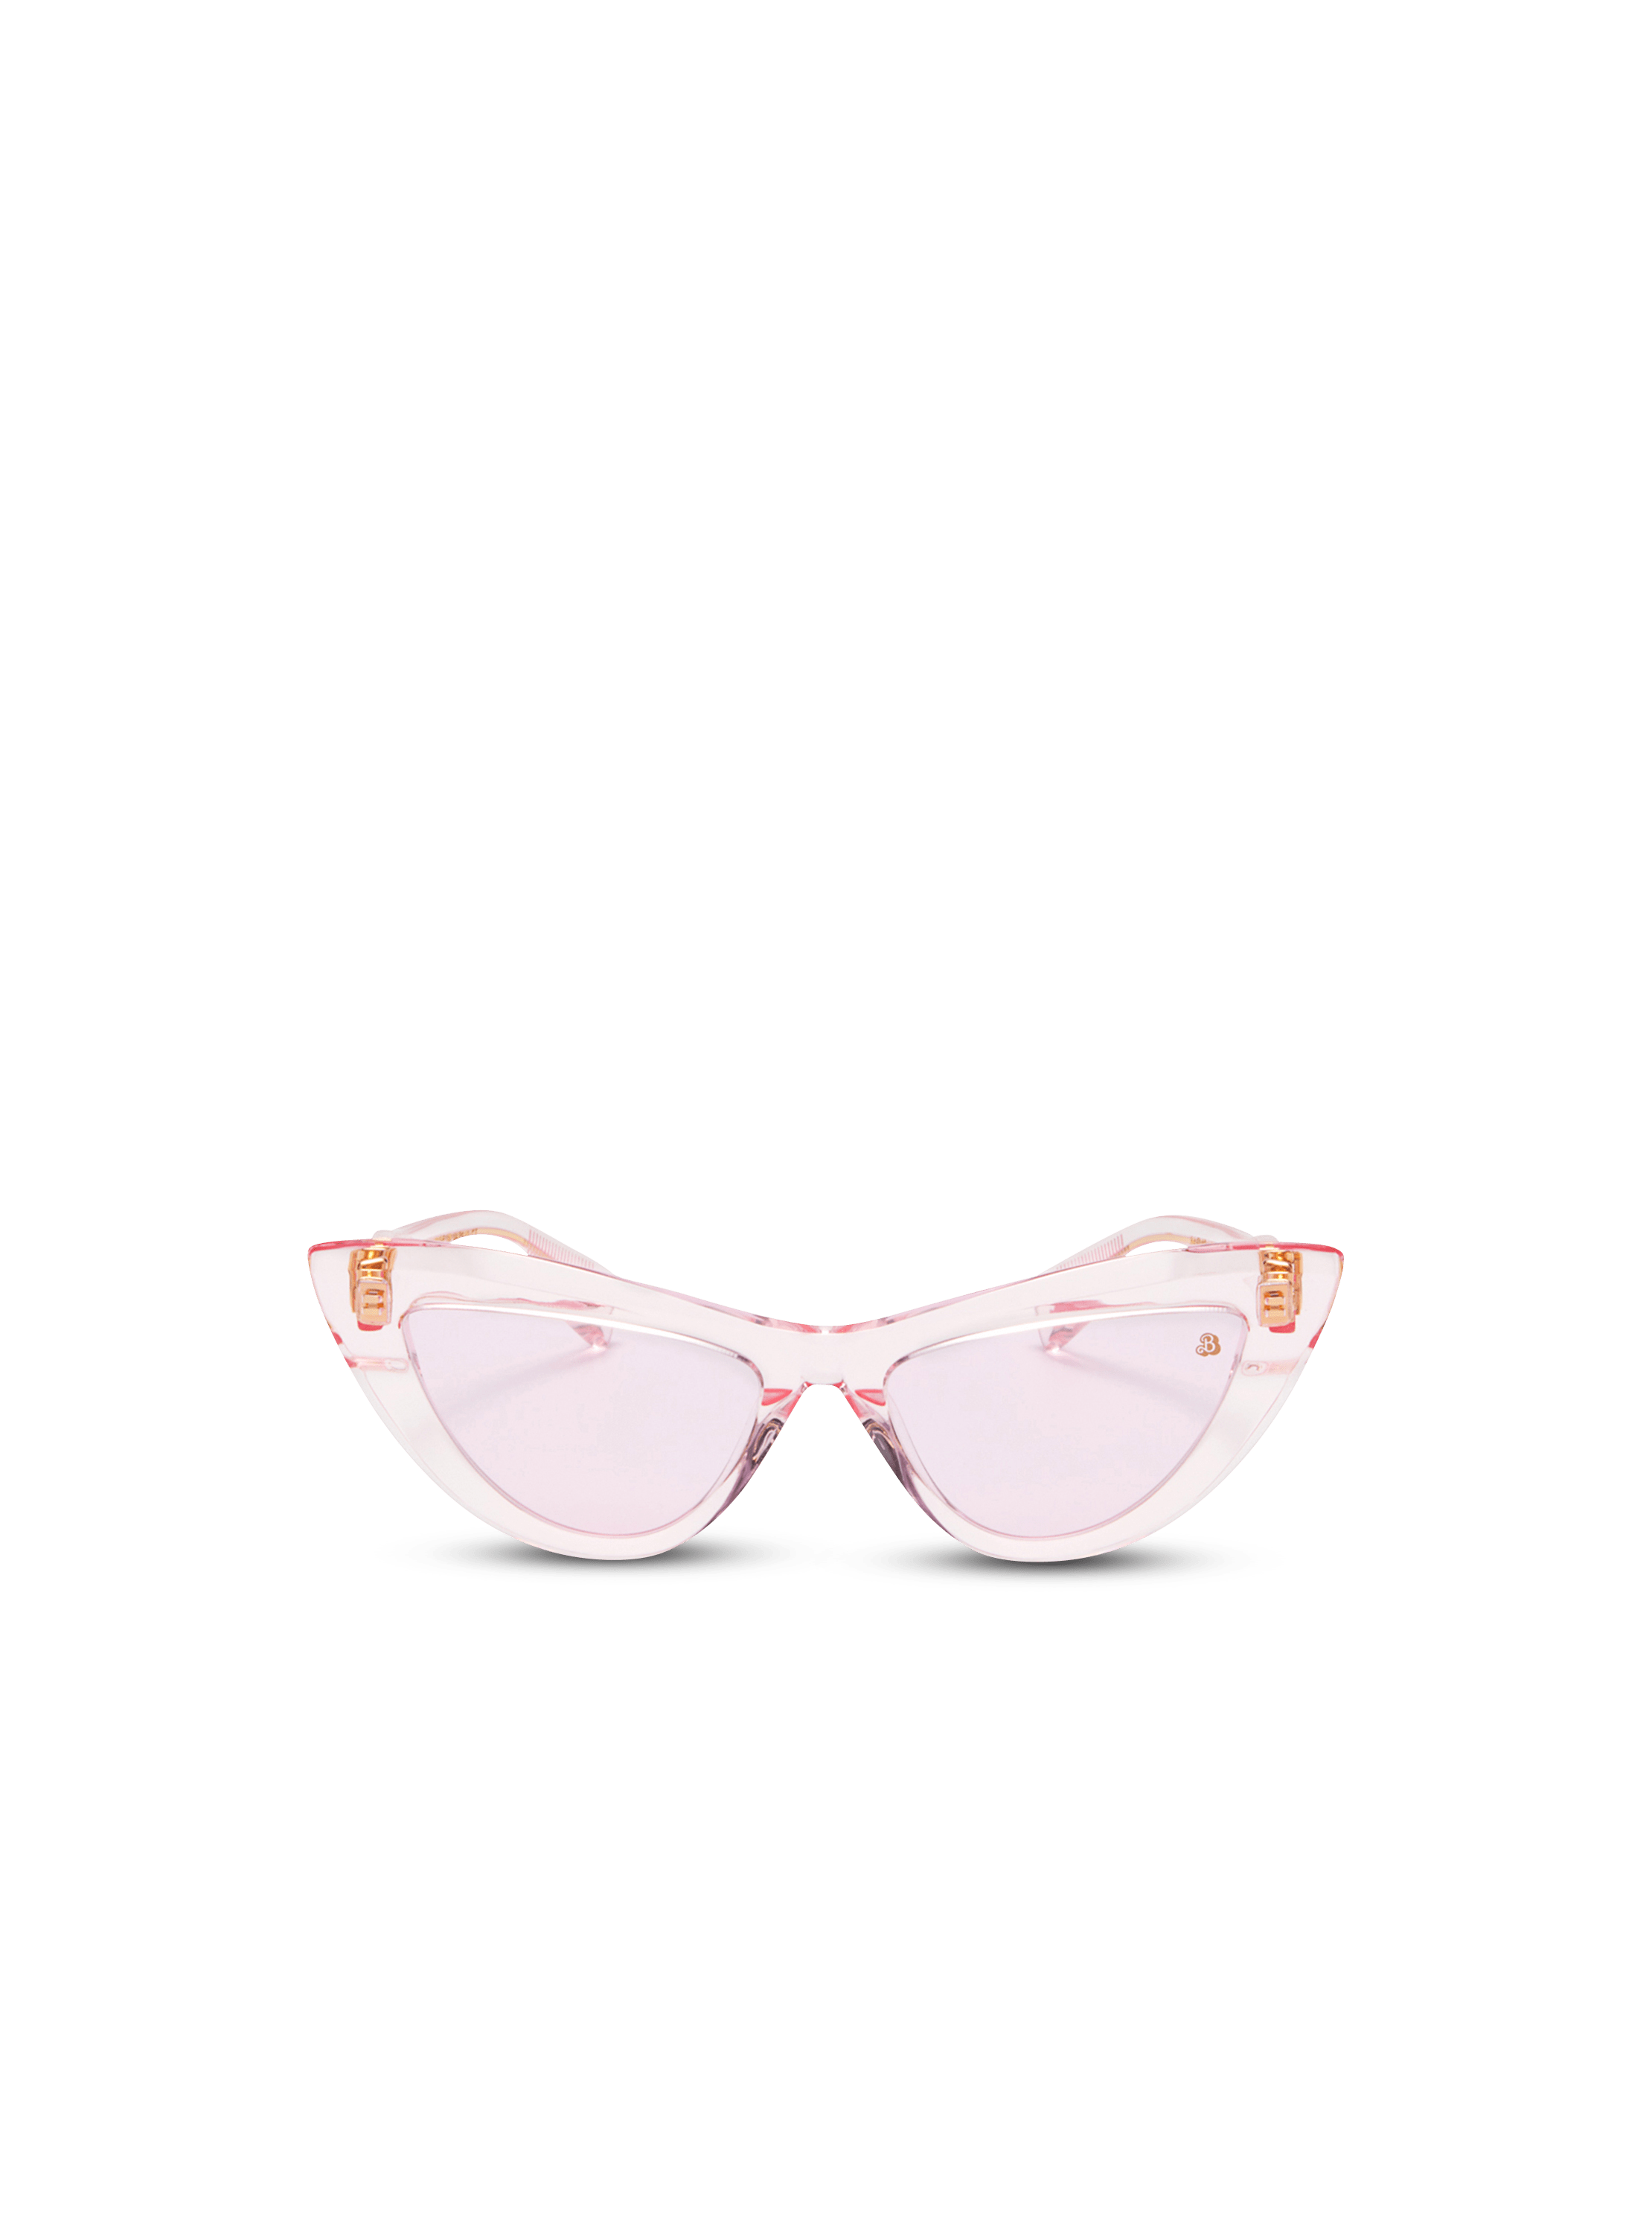 Balmain x Barbie - Jolie sunglasses